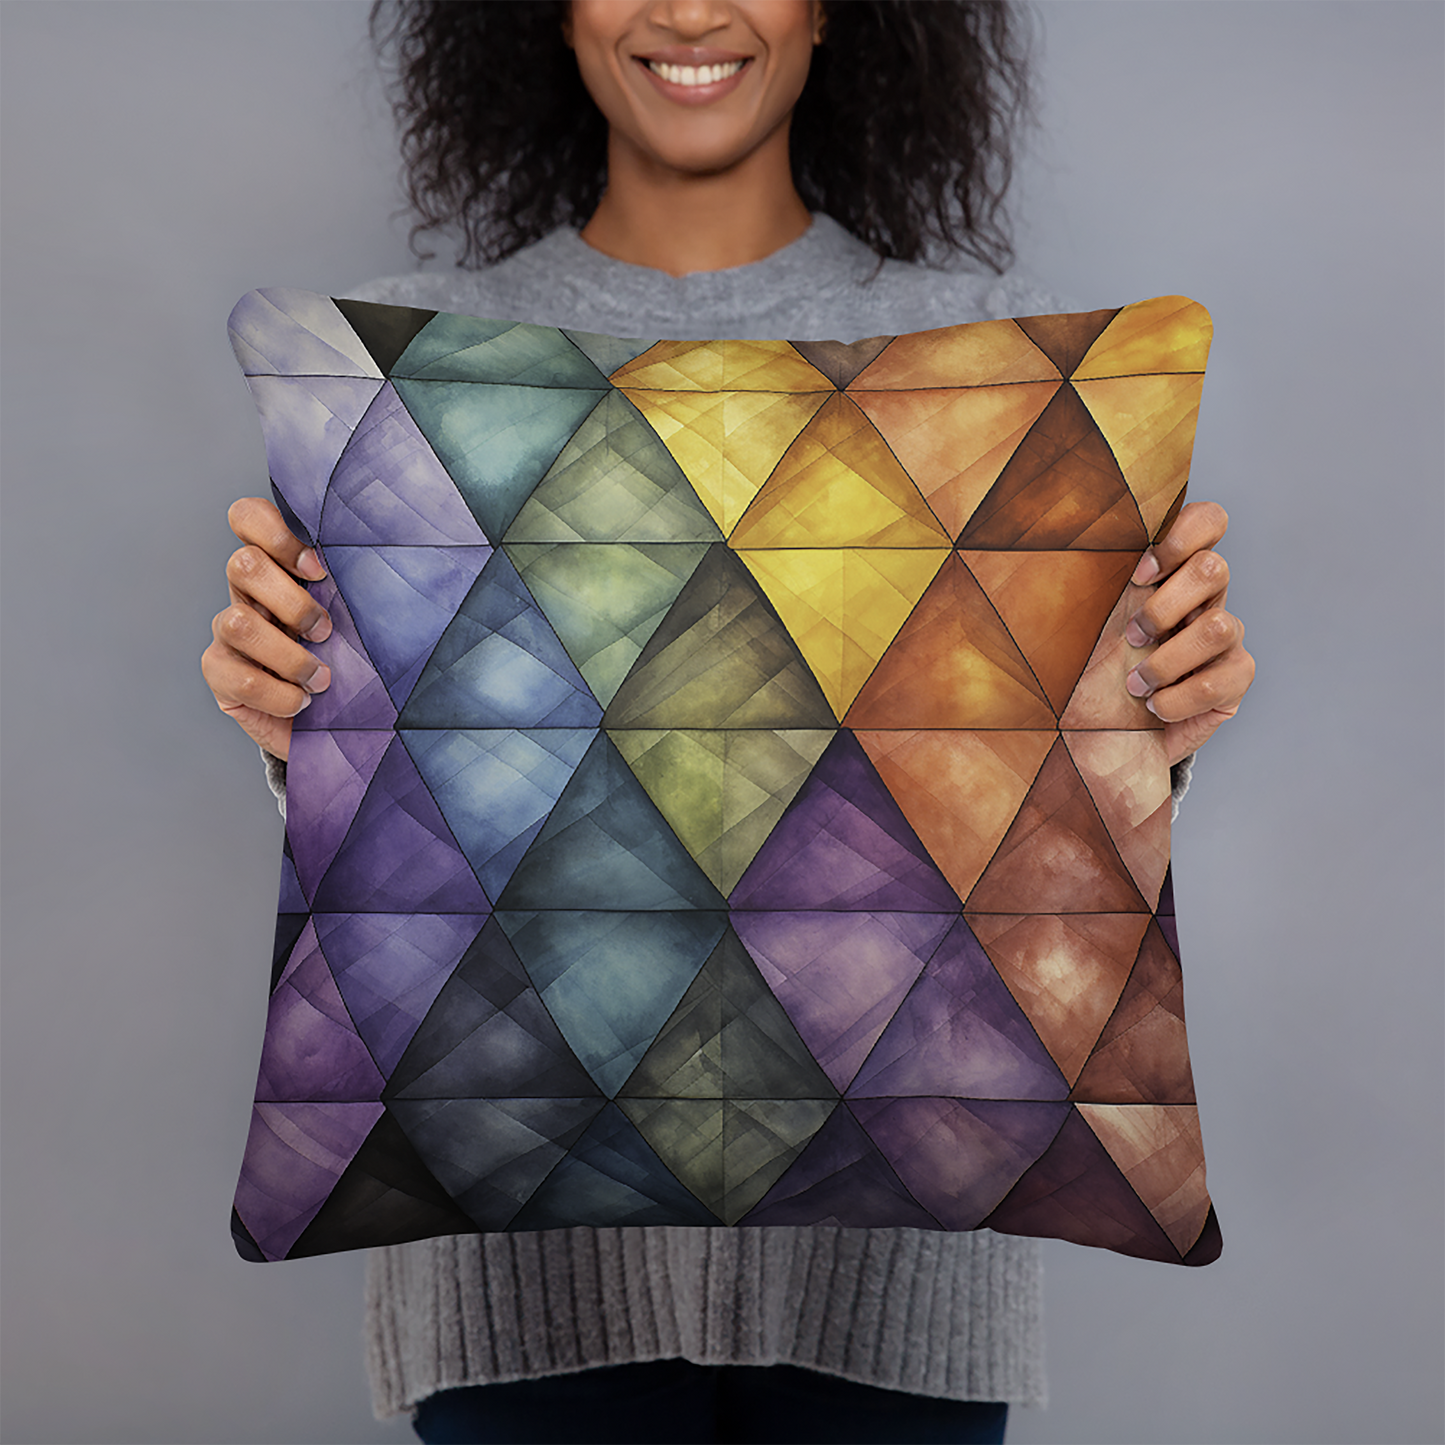 Geometric Throw Pillow Diamond Quilt Pattern Polyester Decorative Cushion 18x18